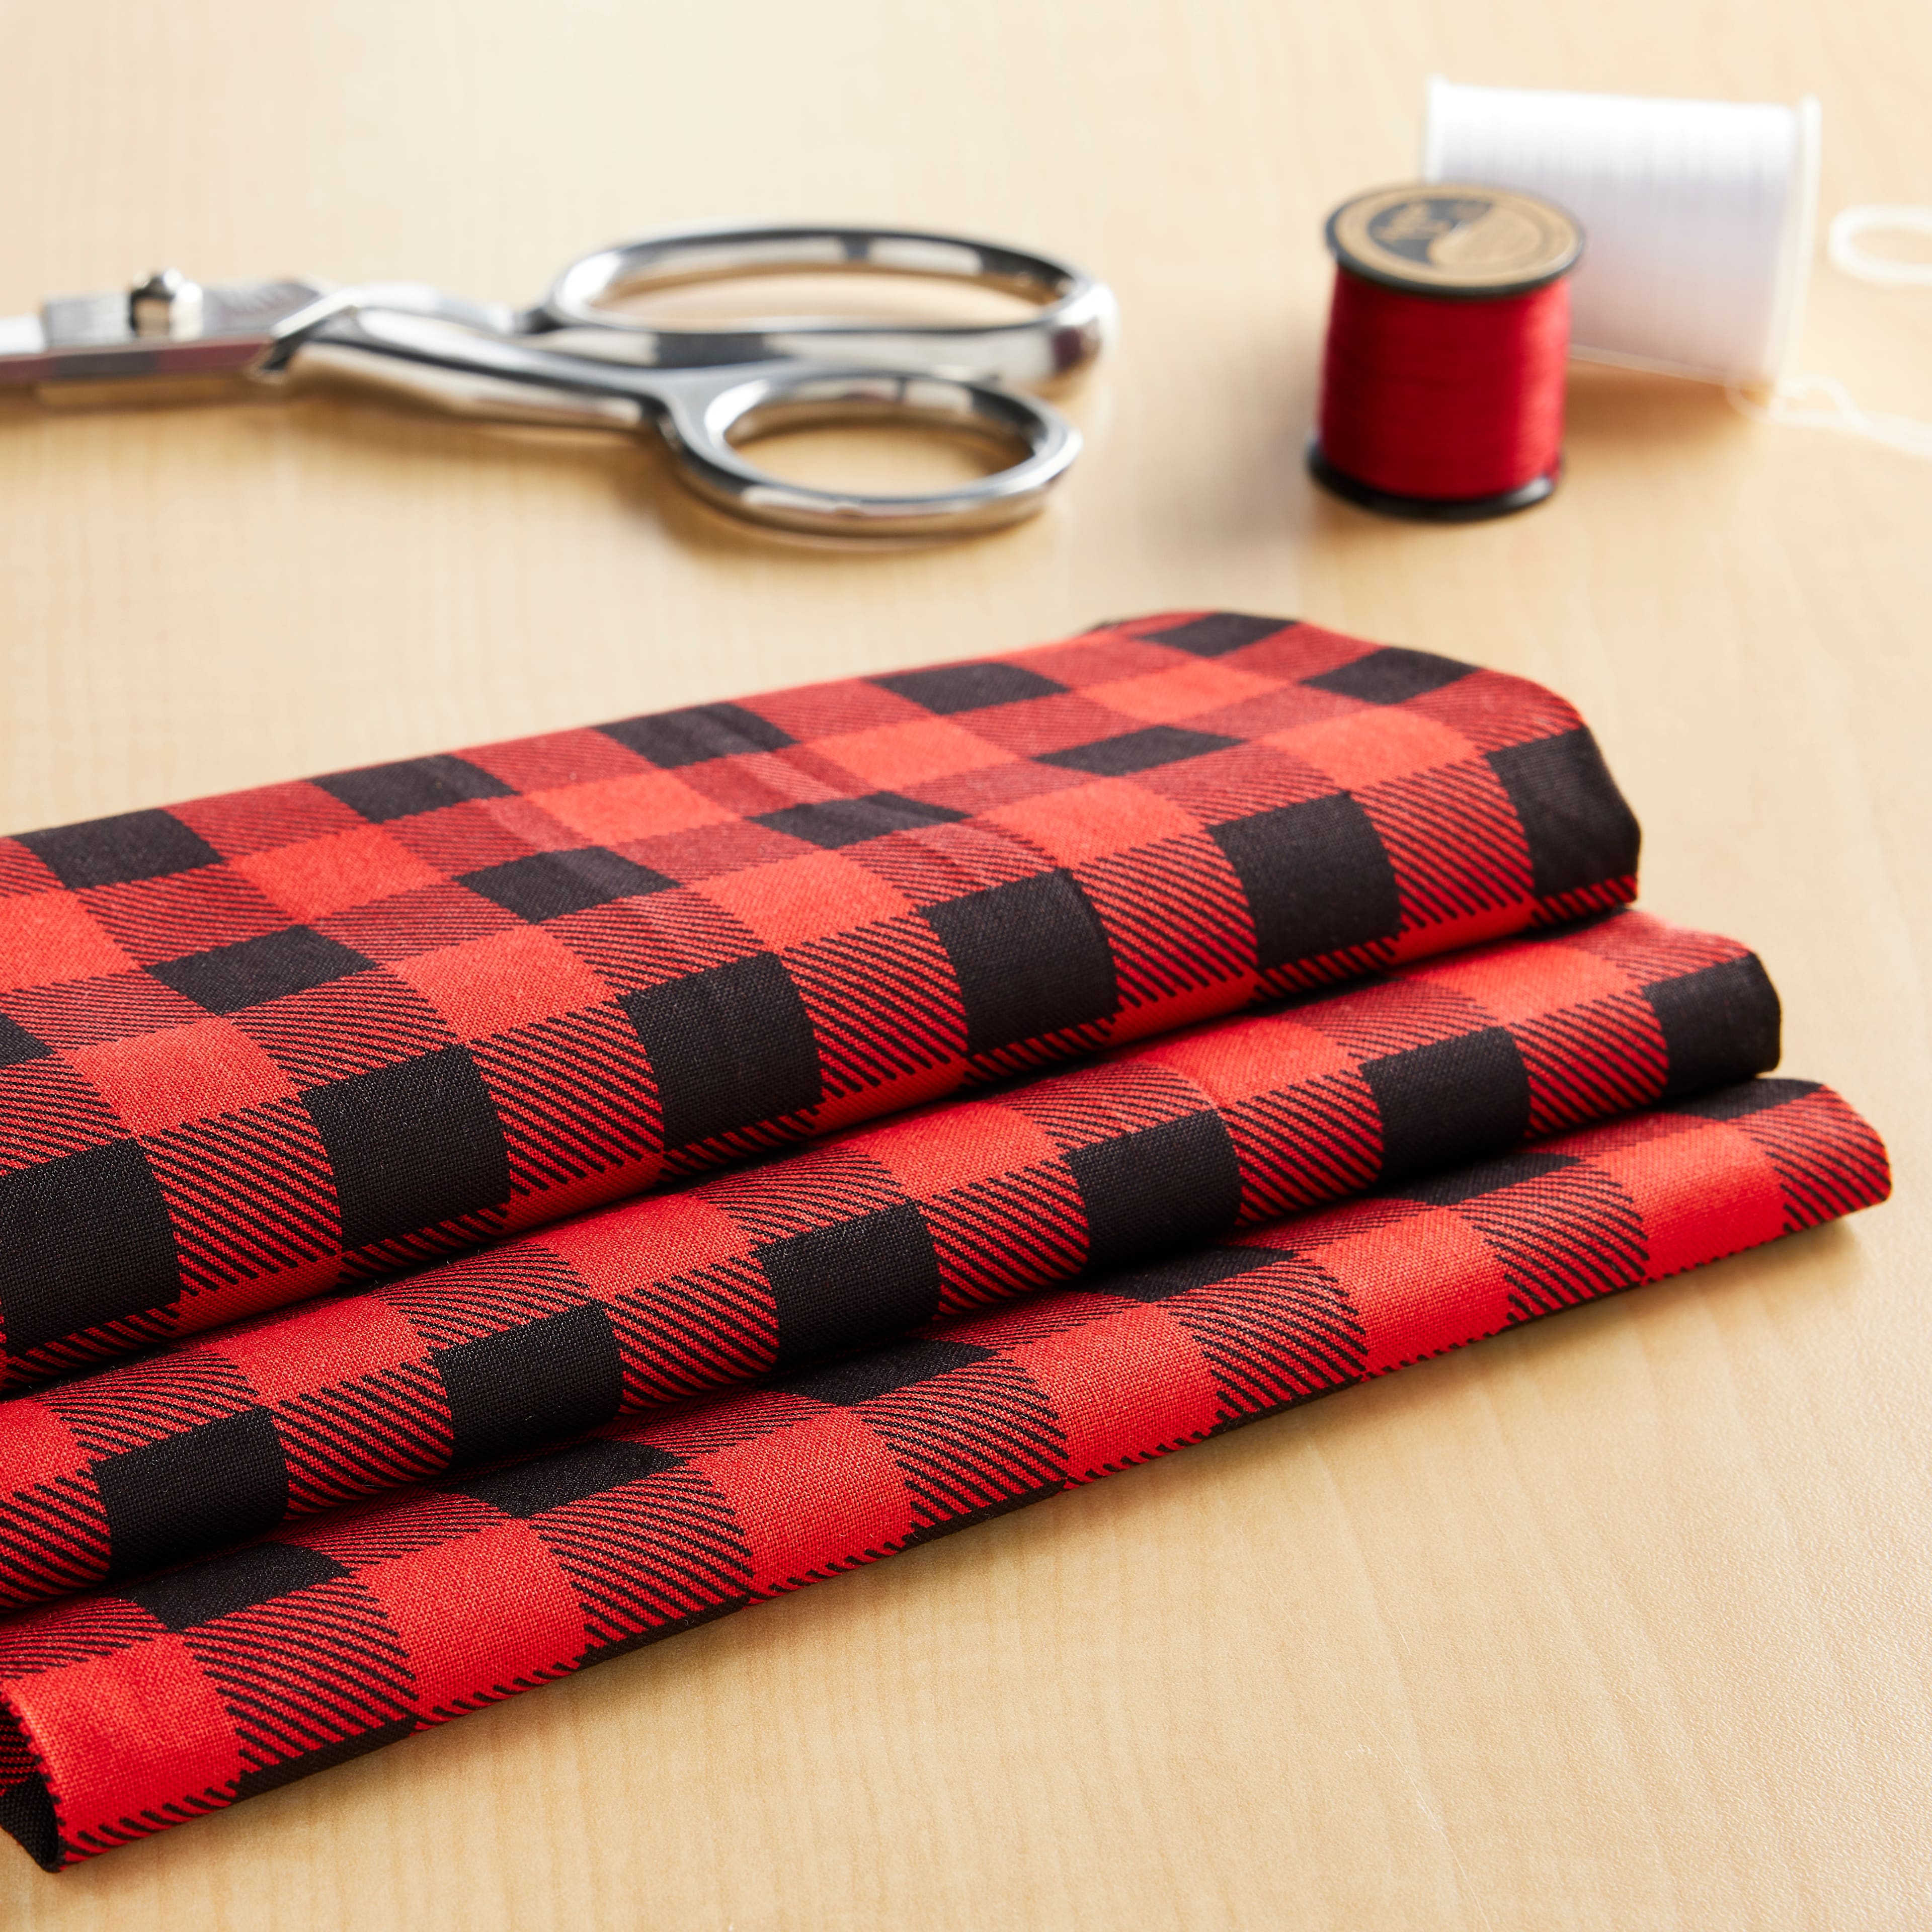 Pre Cut 50 CM ) Tartan Checks Cotton Flannel Fabric